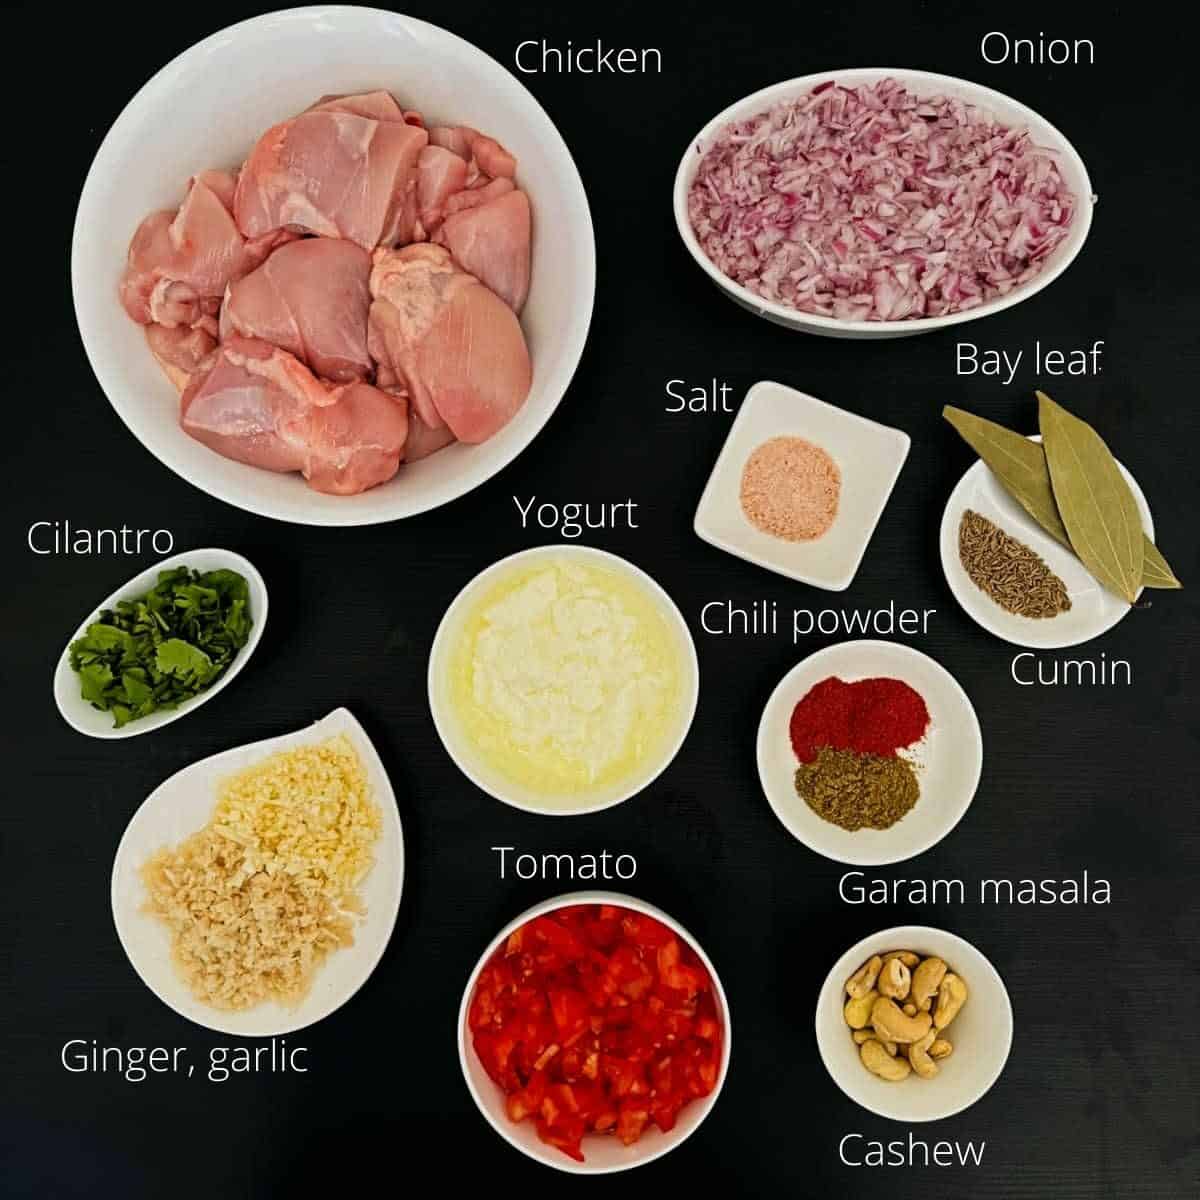 balti chicken ingredients with labels.